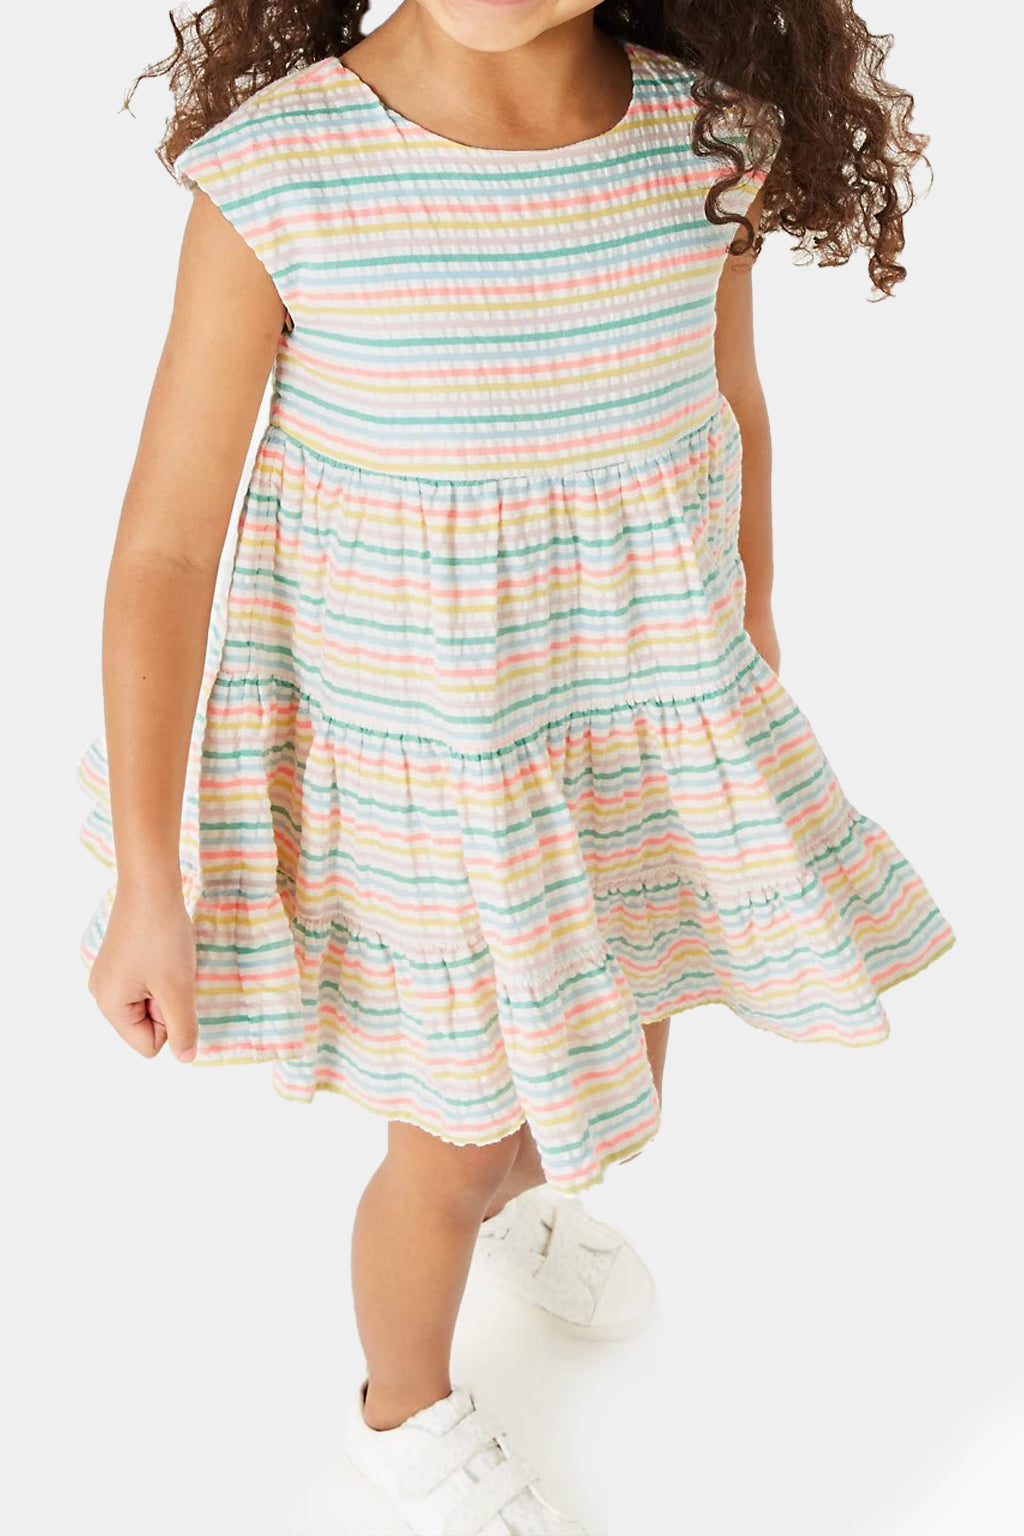 Marks & Spencer - Cotton Seersucker Striped Dress